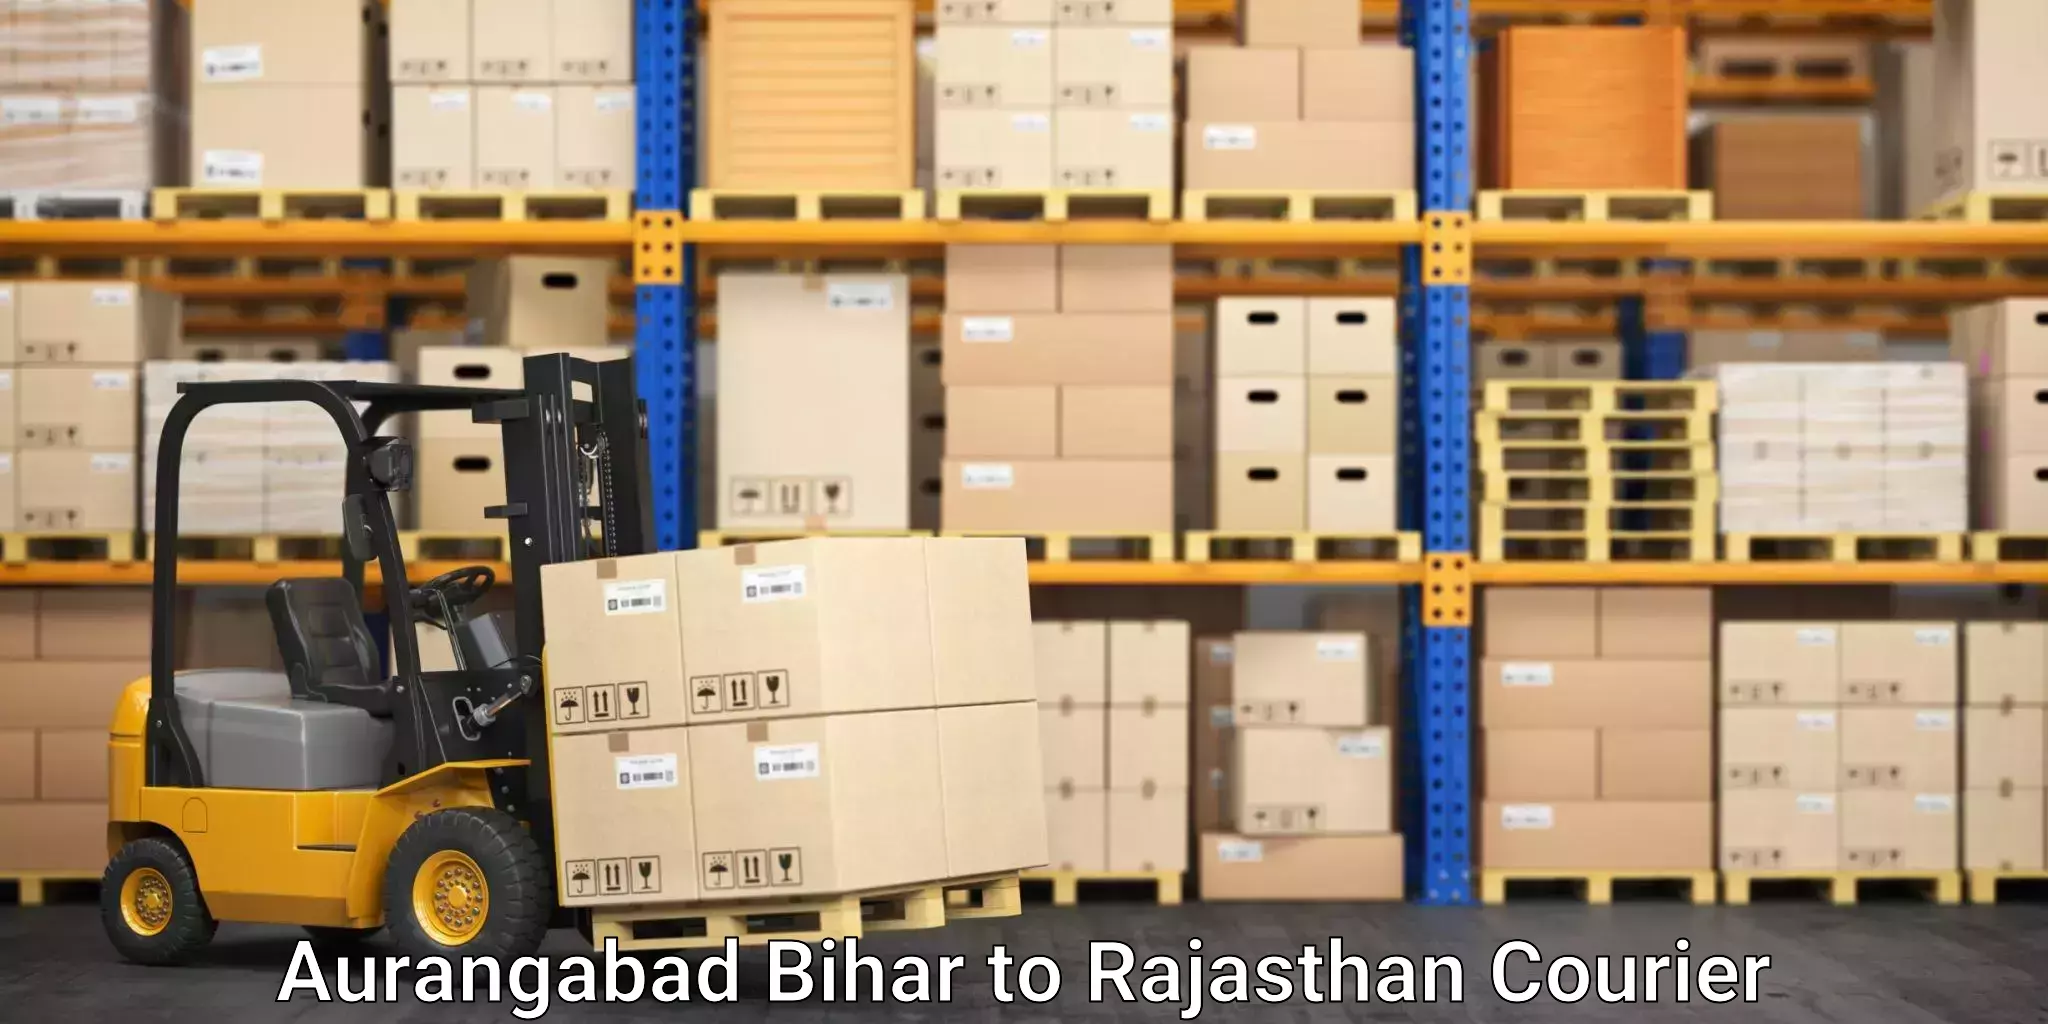 Furniture transport professionals Aurangabad Bihar to Baran